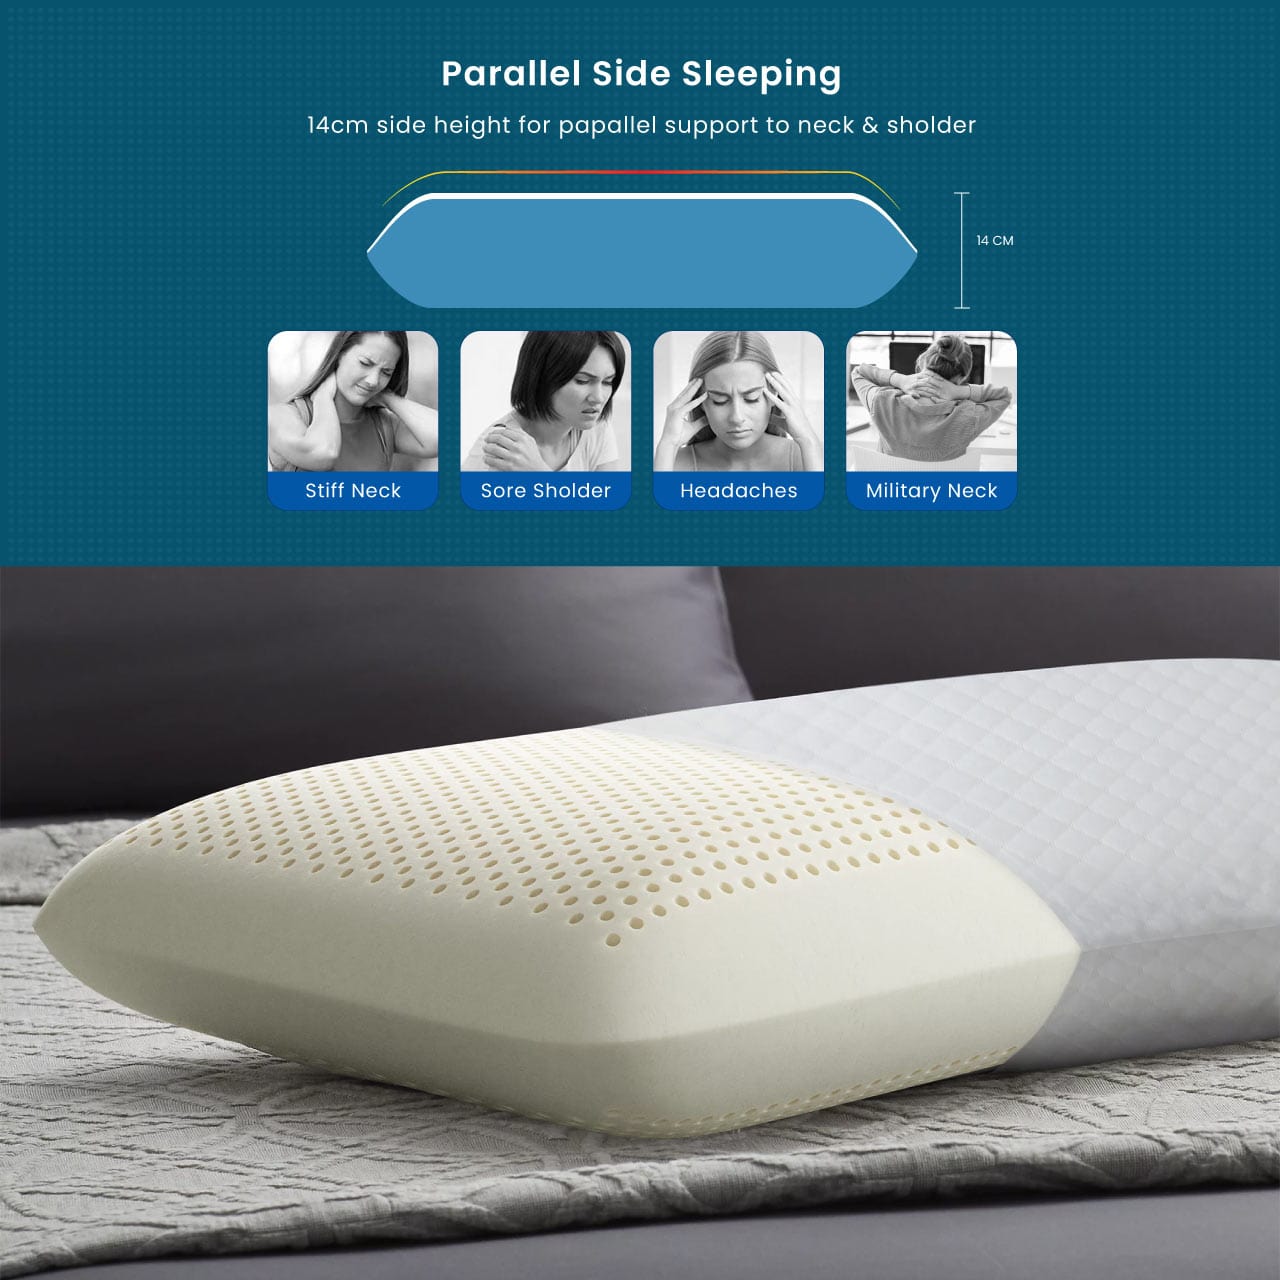 Cotton Home Venus Breathable surface Memory Foam Pillow Anti-stress Fabric White